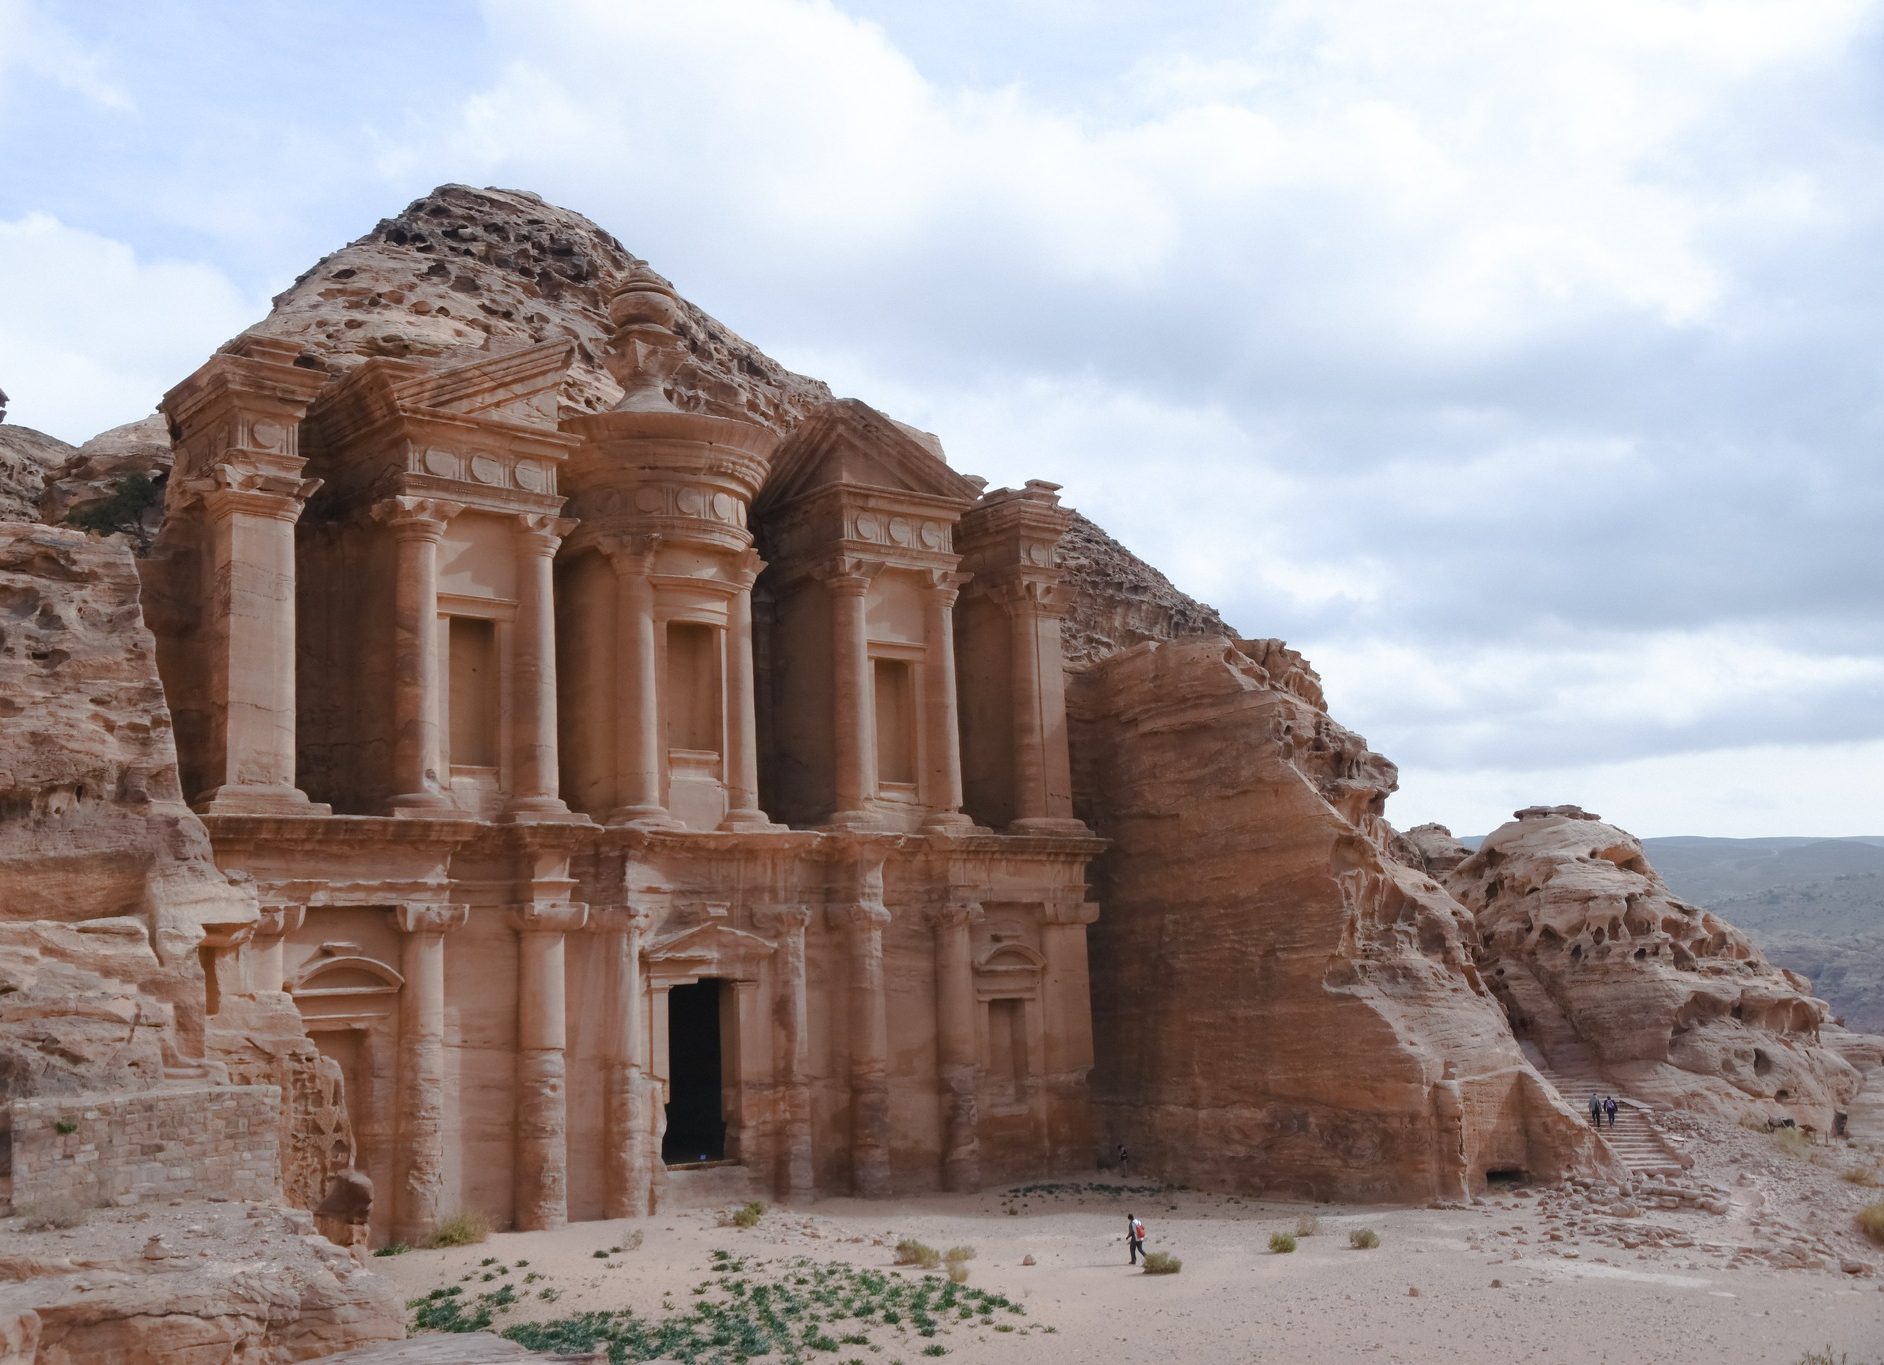 Petra Archaeological Site In Jordan